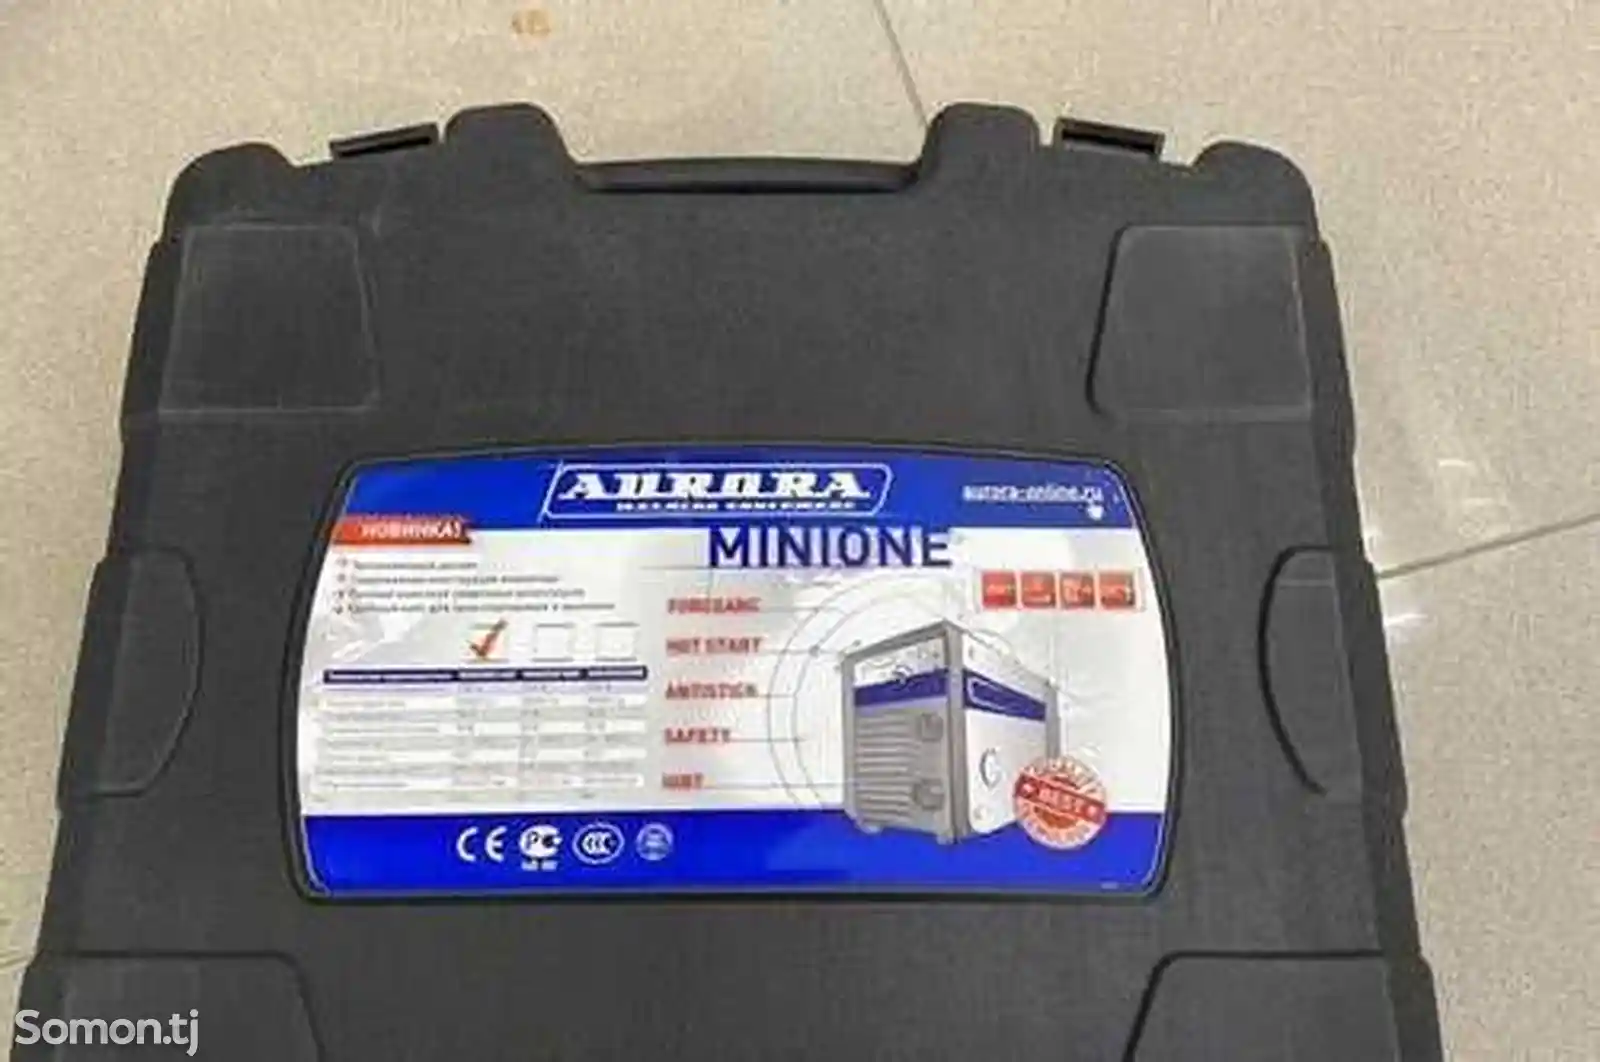 Сварочный аппарат инверторного типа Aurora Minione1600 Case, Mma-3